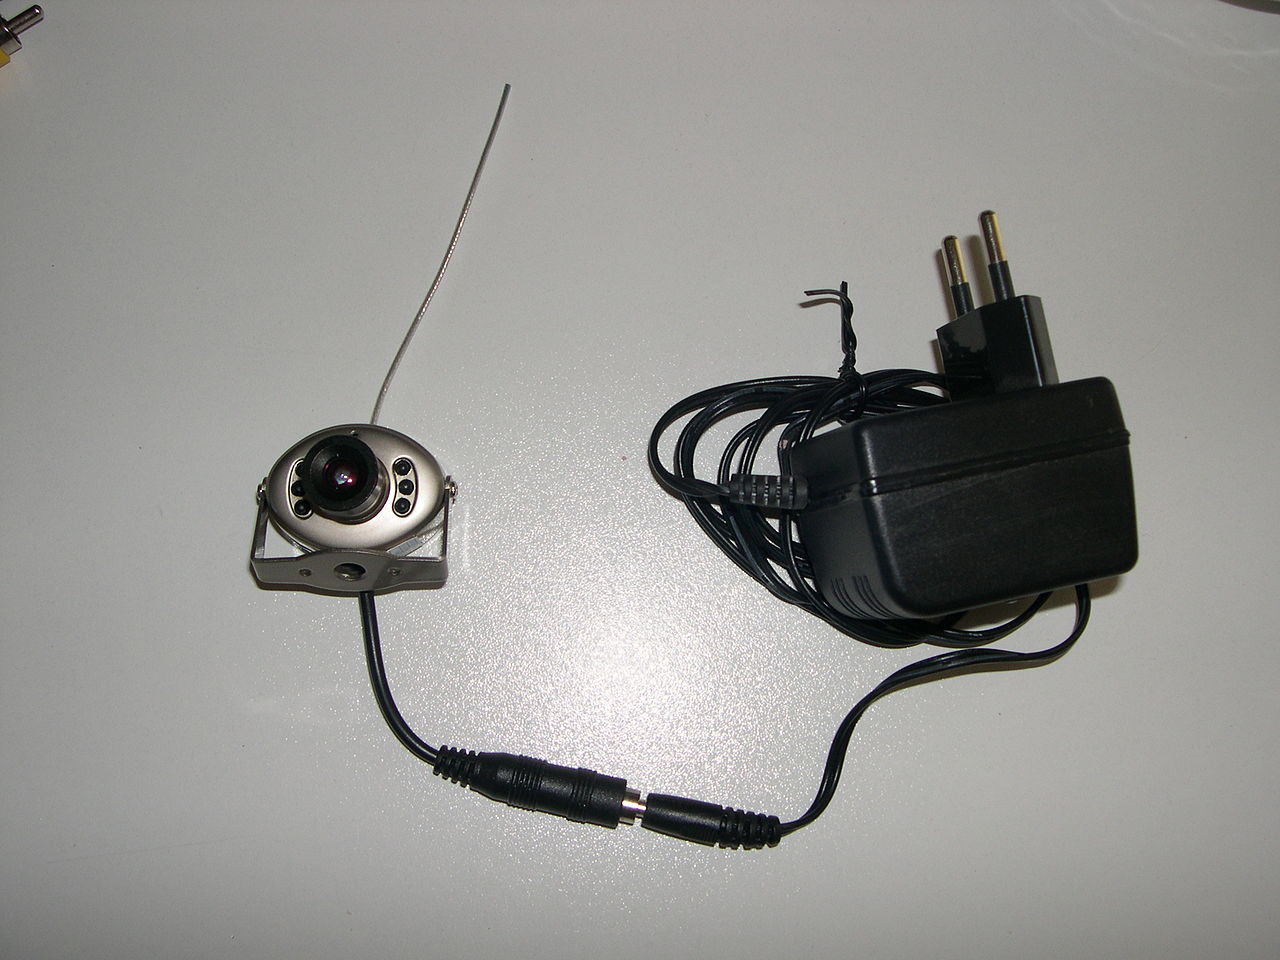 File:Camera sans-fil 1.2 GHz.jpg - Wikimedia Commons